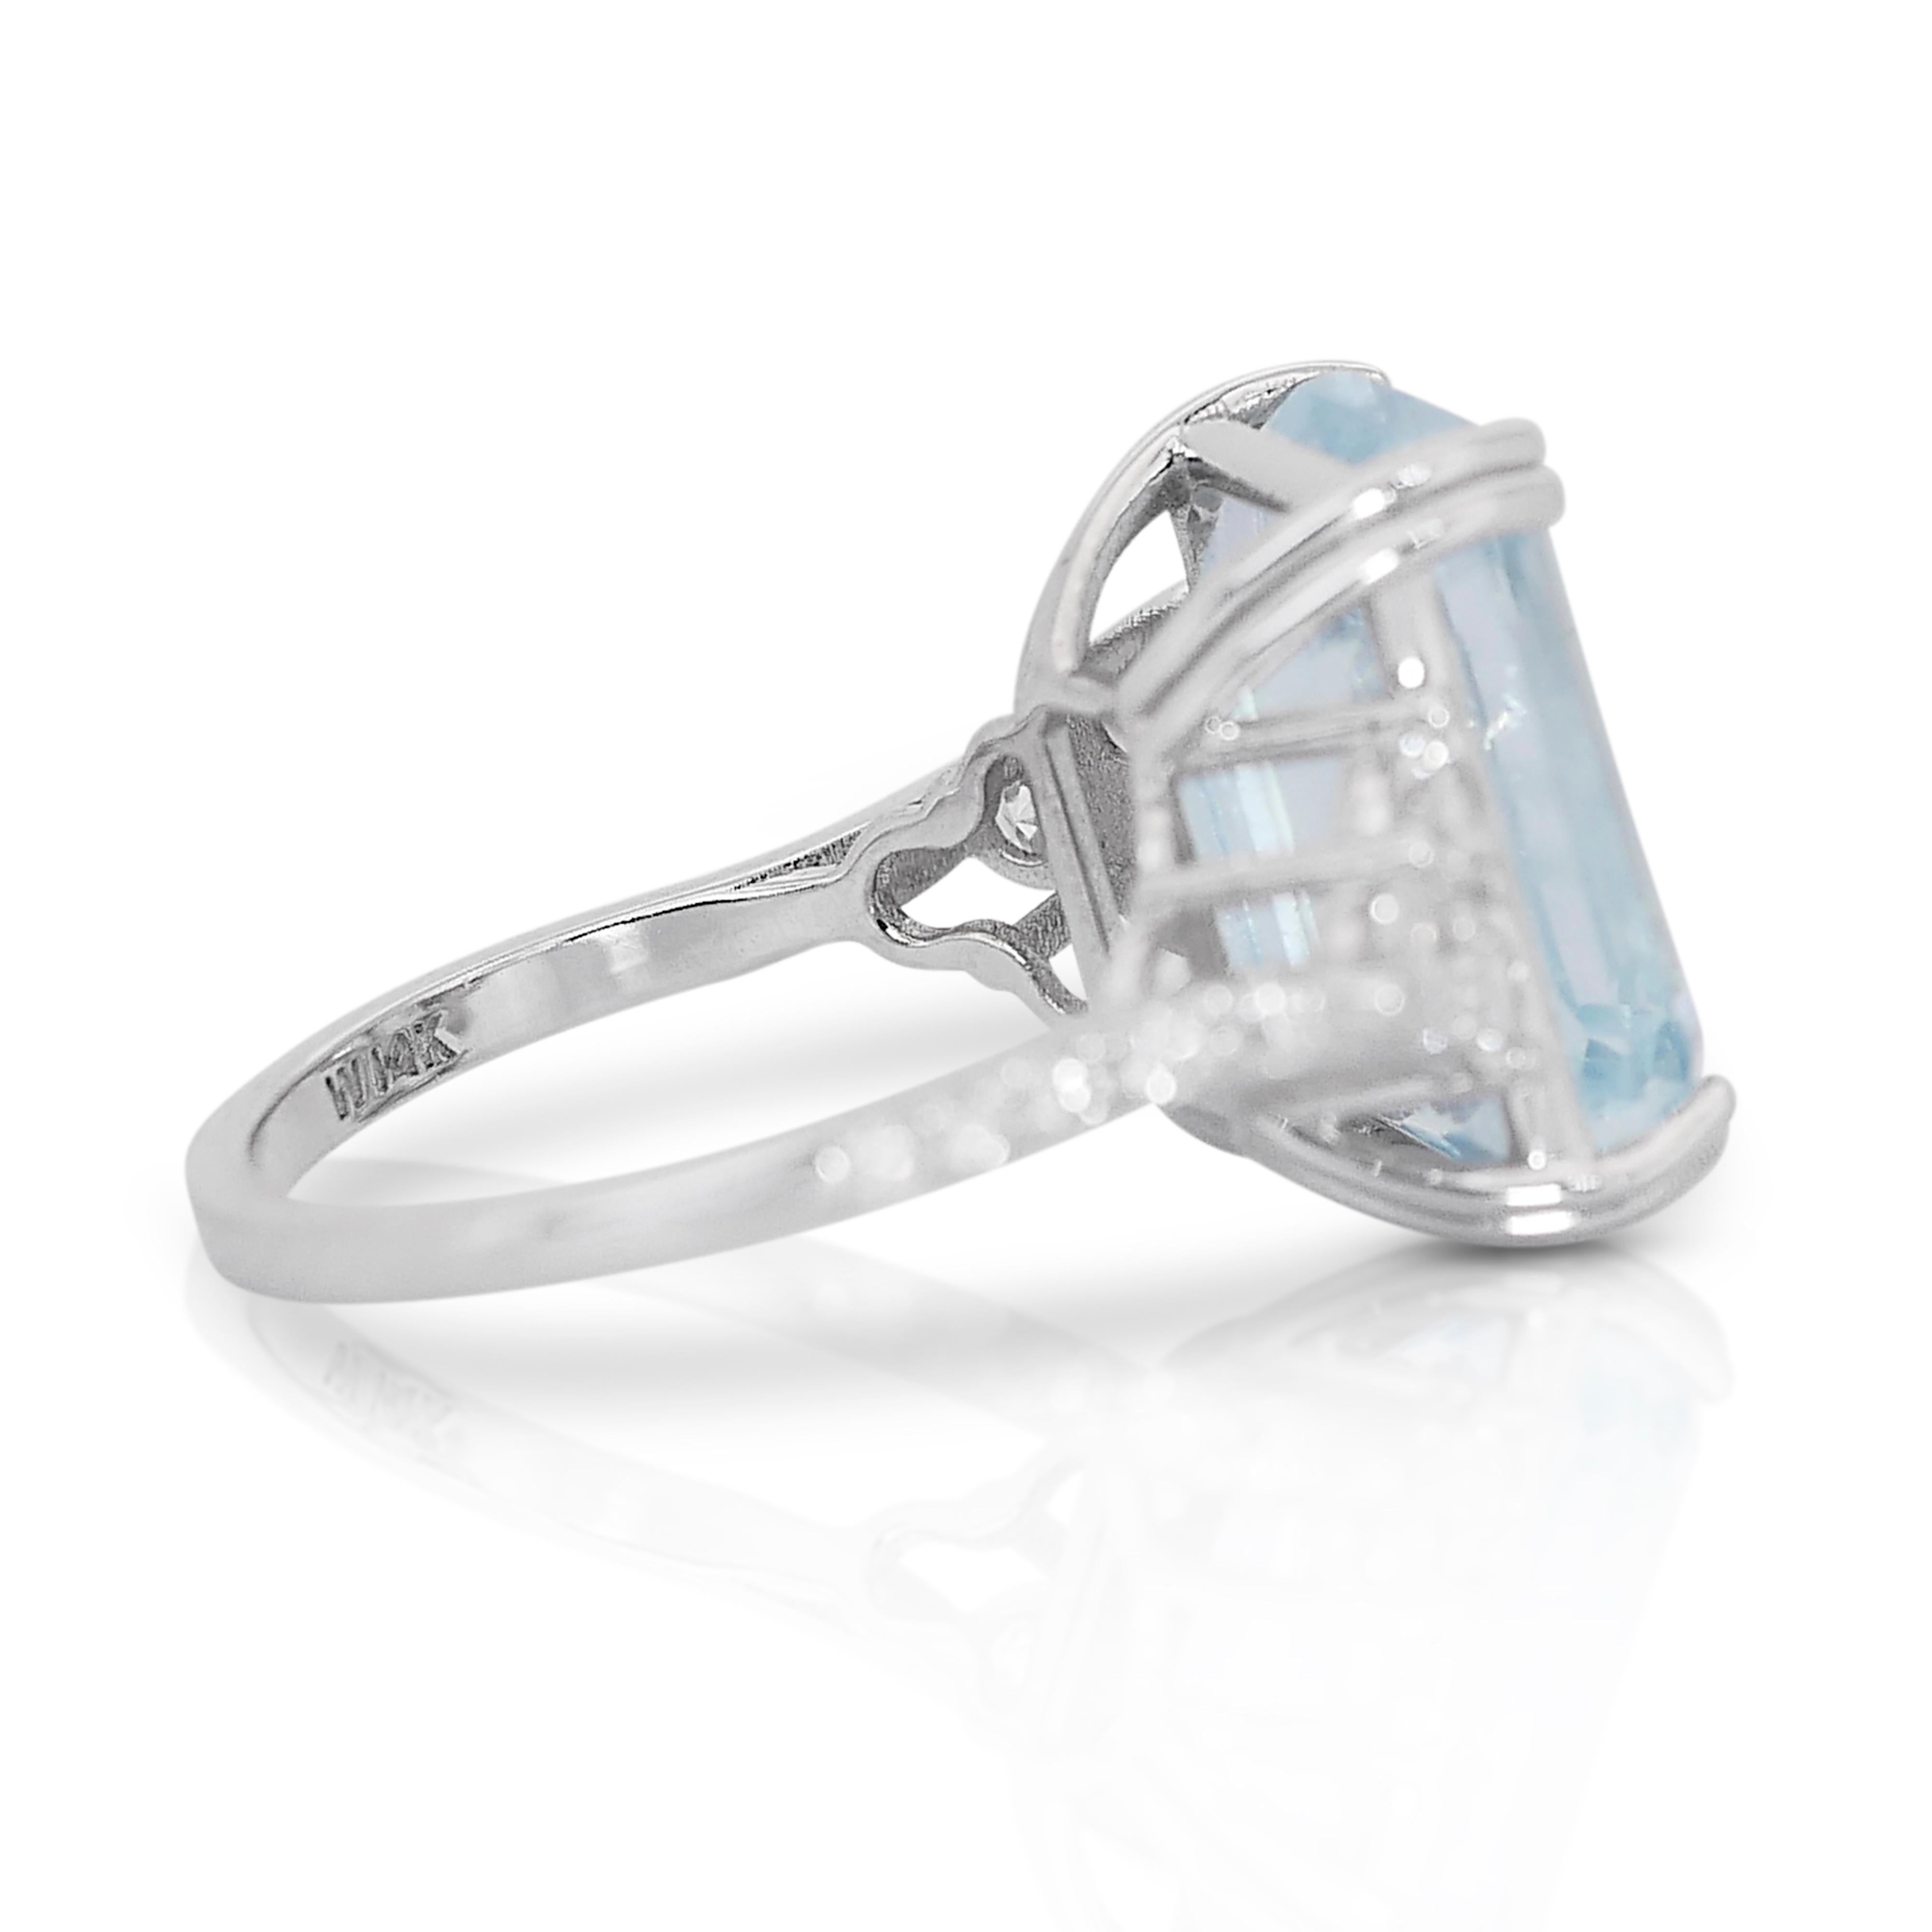 Enchanting 8.80 Carat Emerald Cut Aquamarine Ring in 14K White Gold 4